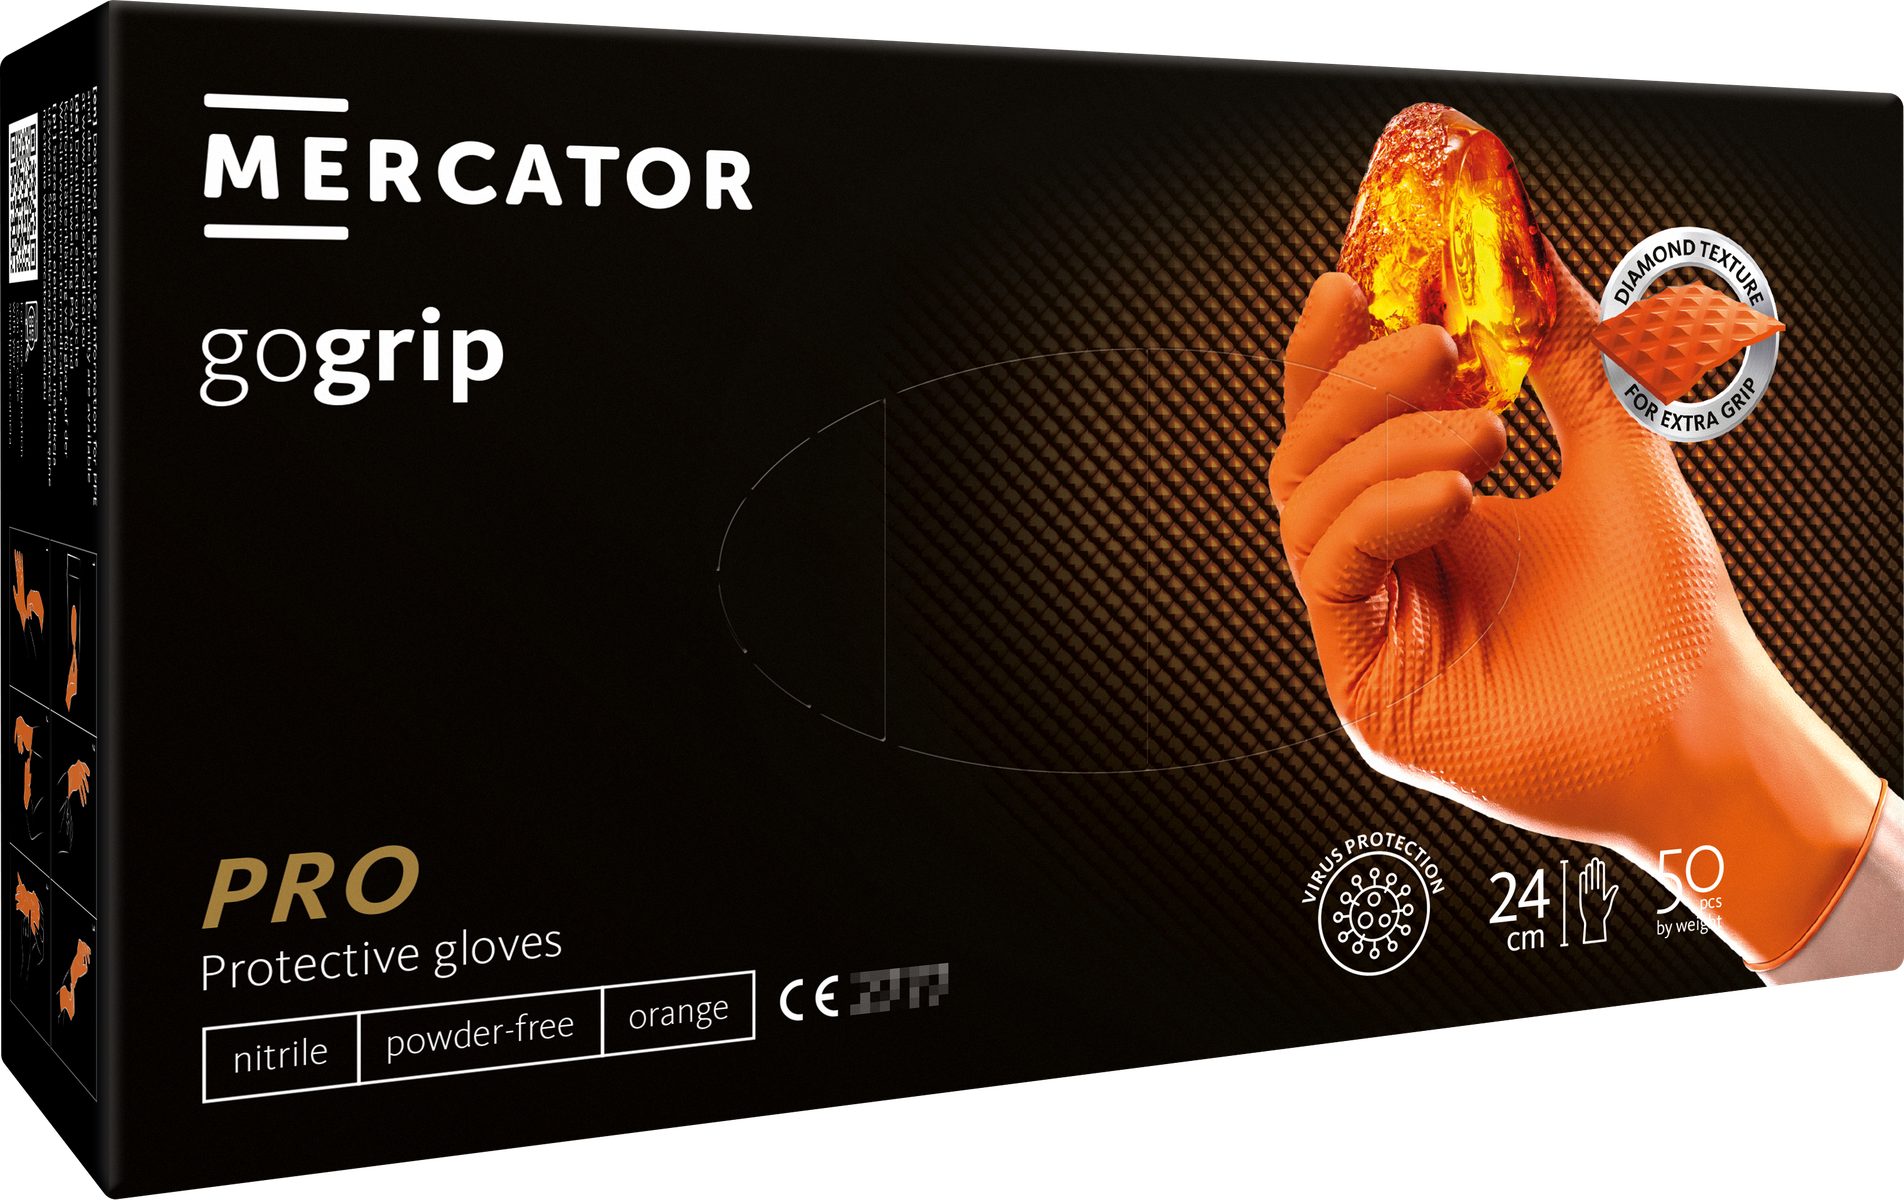 MERCATOR MEDICAL Einweghandschuhe MERCATOR gogrip black Orange